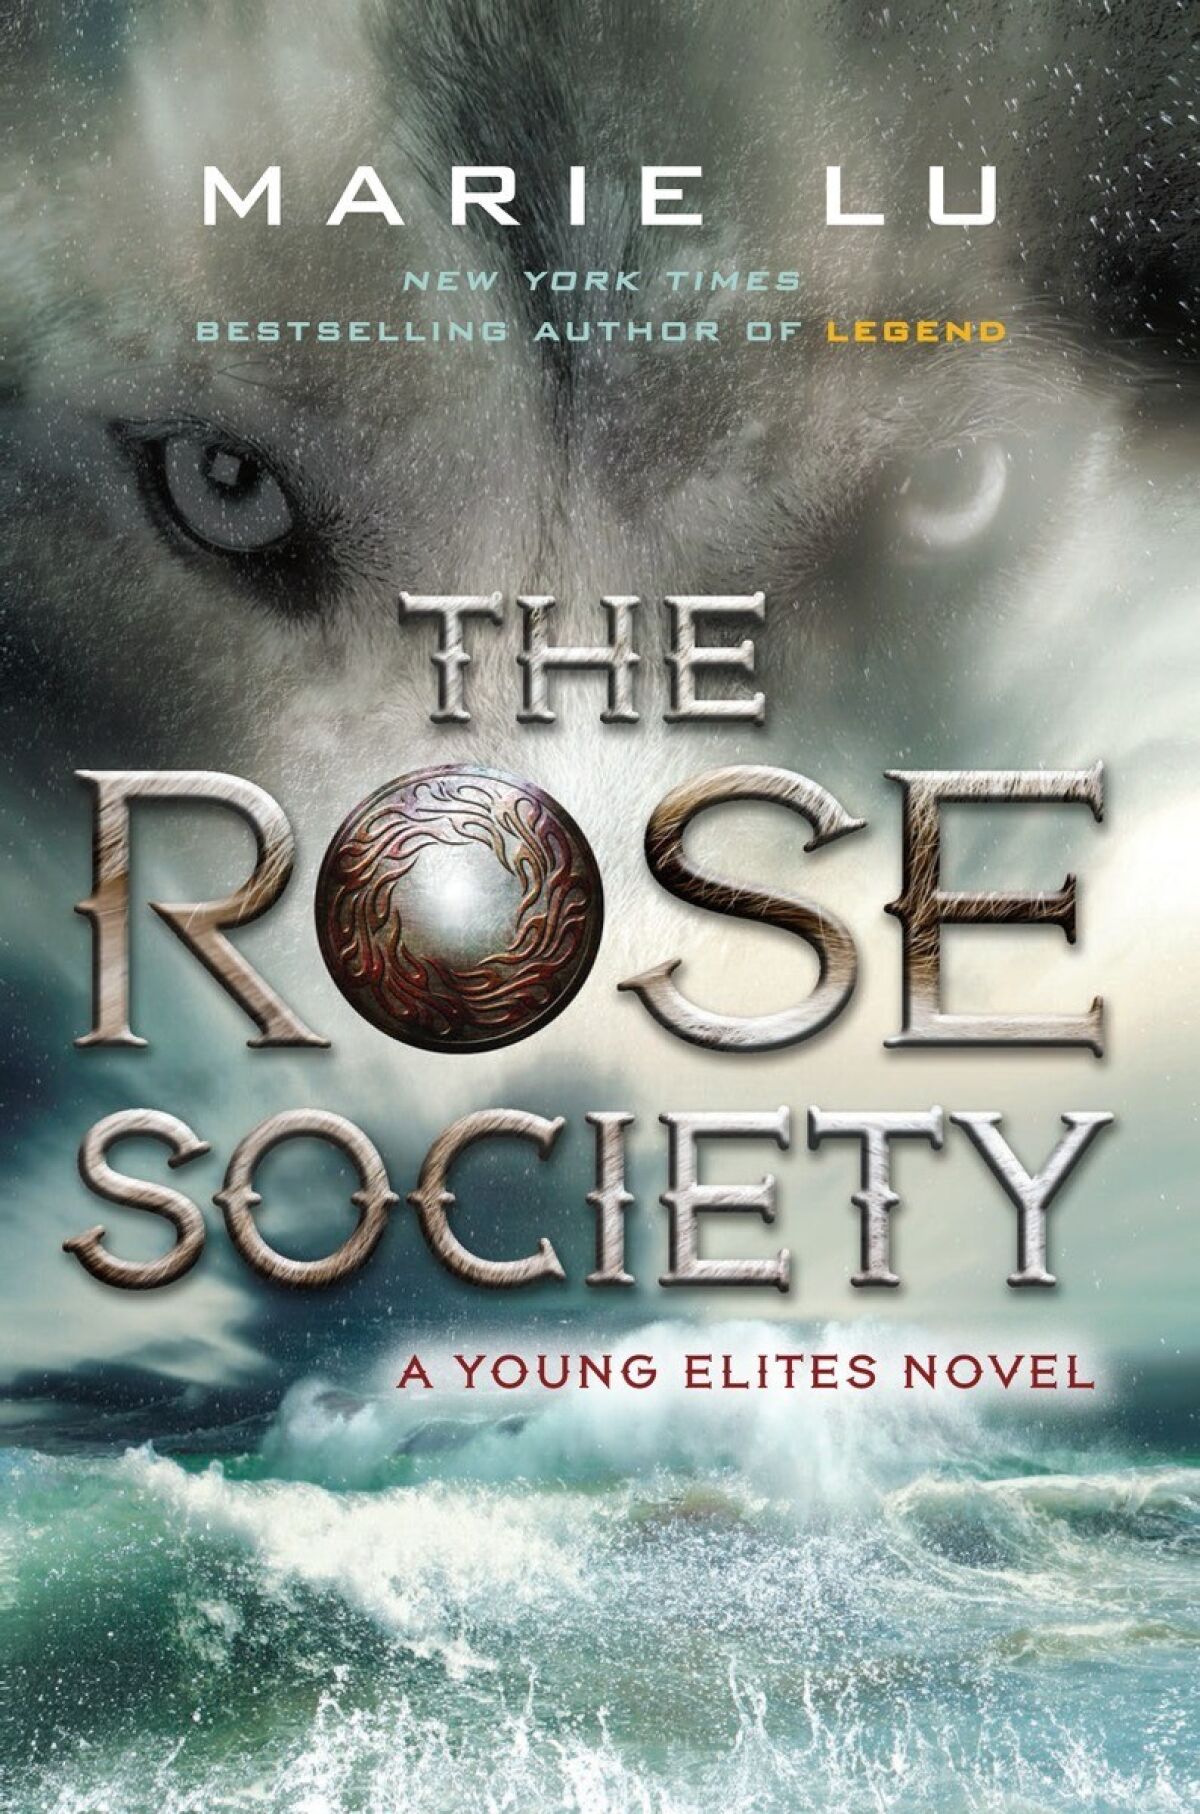 "The Rose Society"